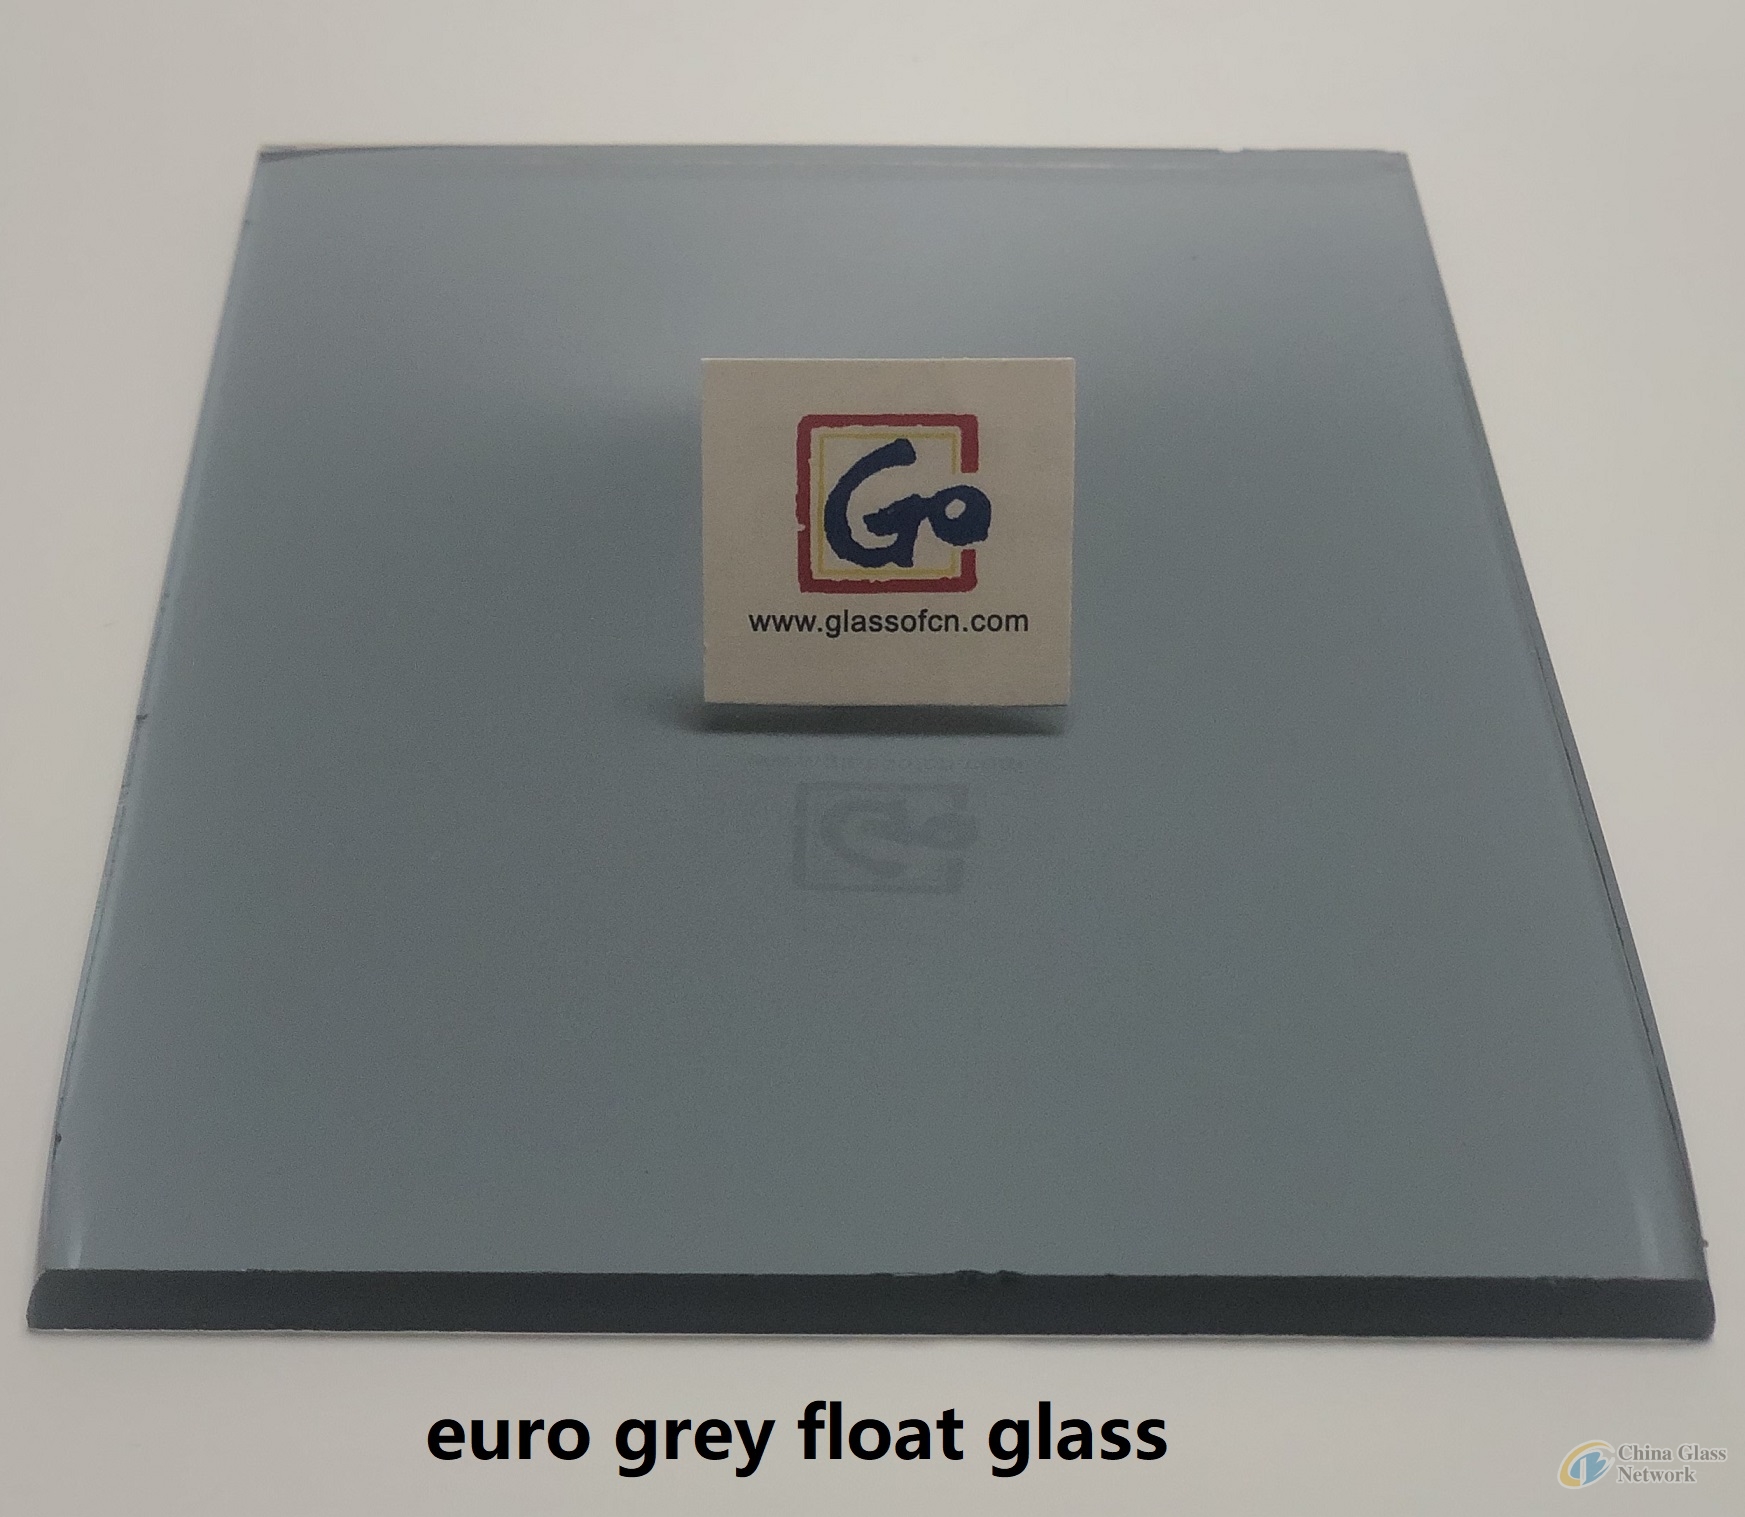 Euro grey float glass